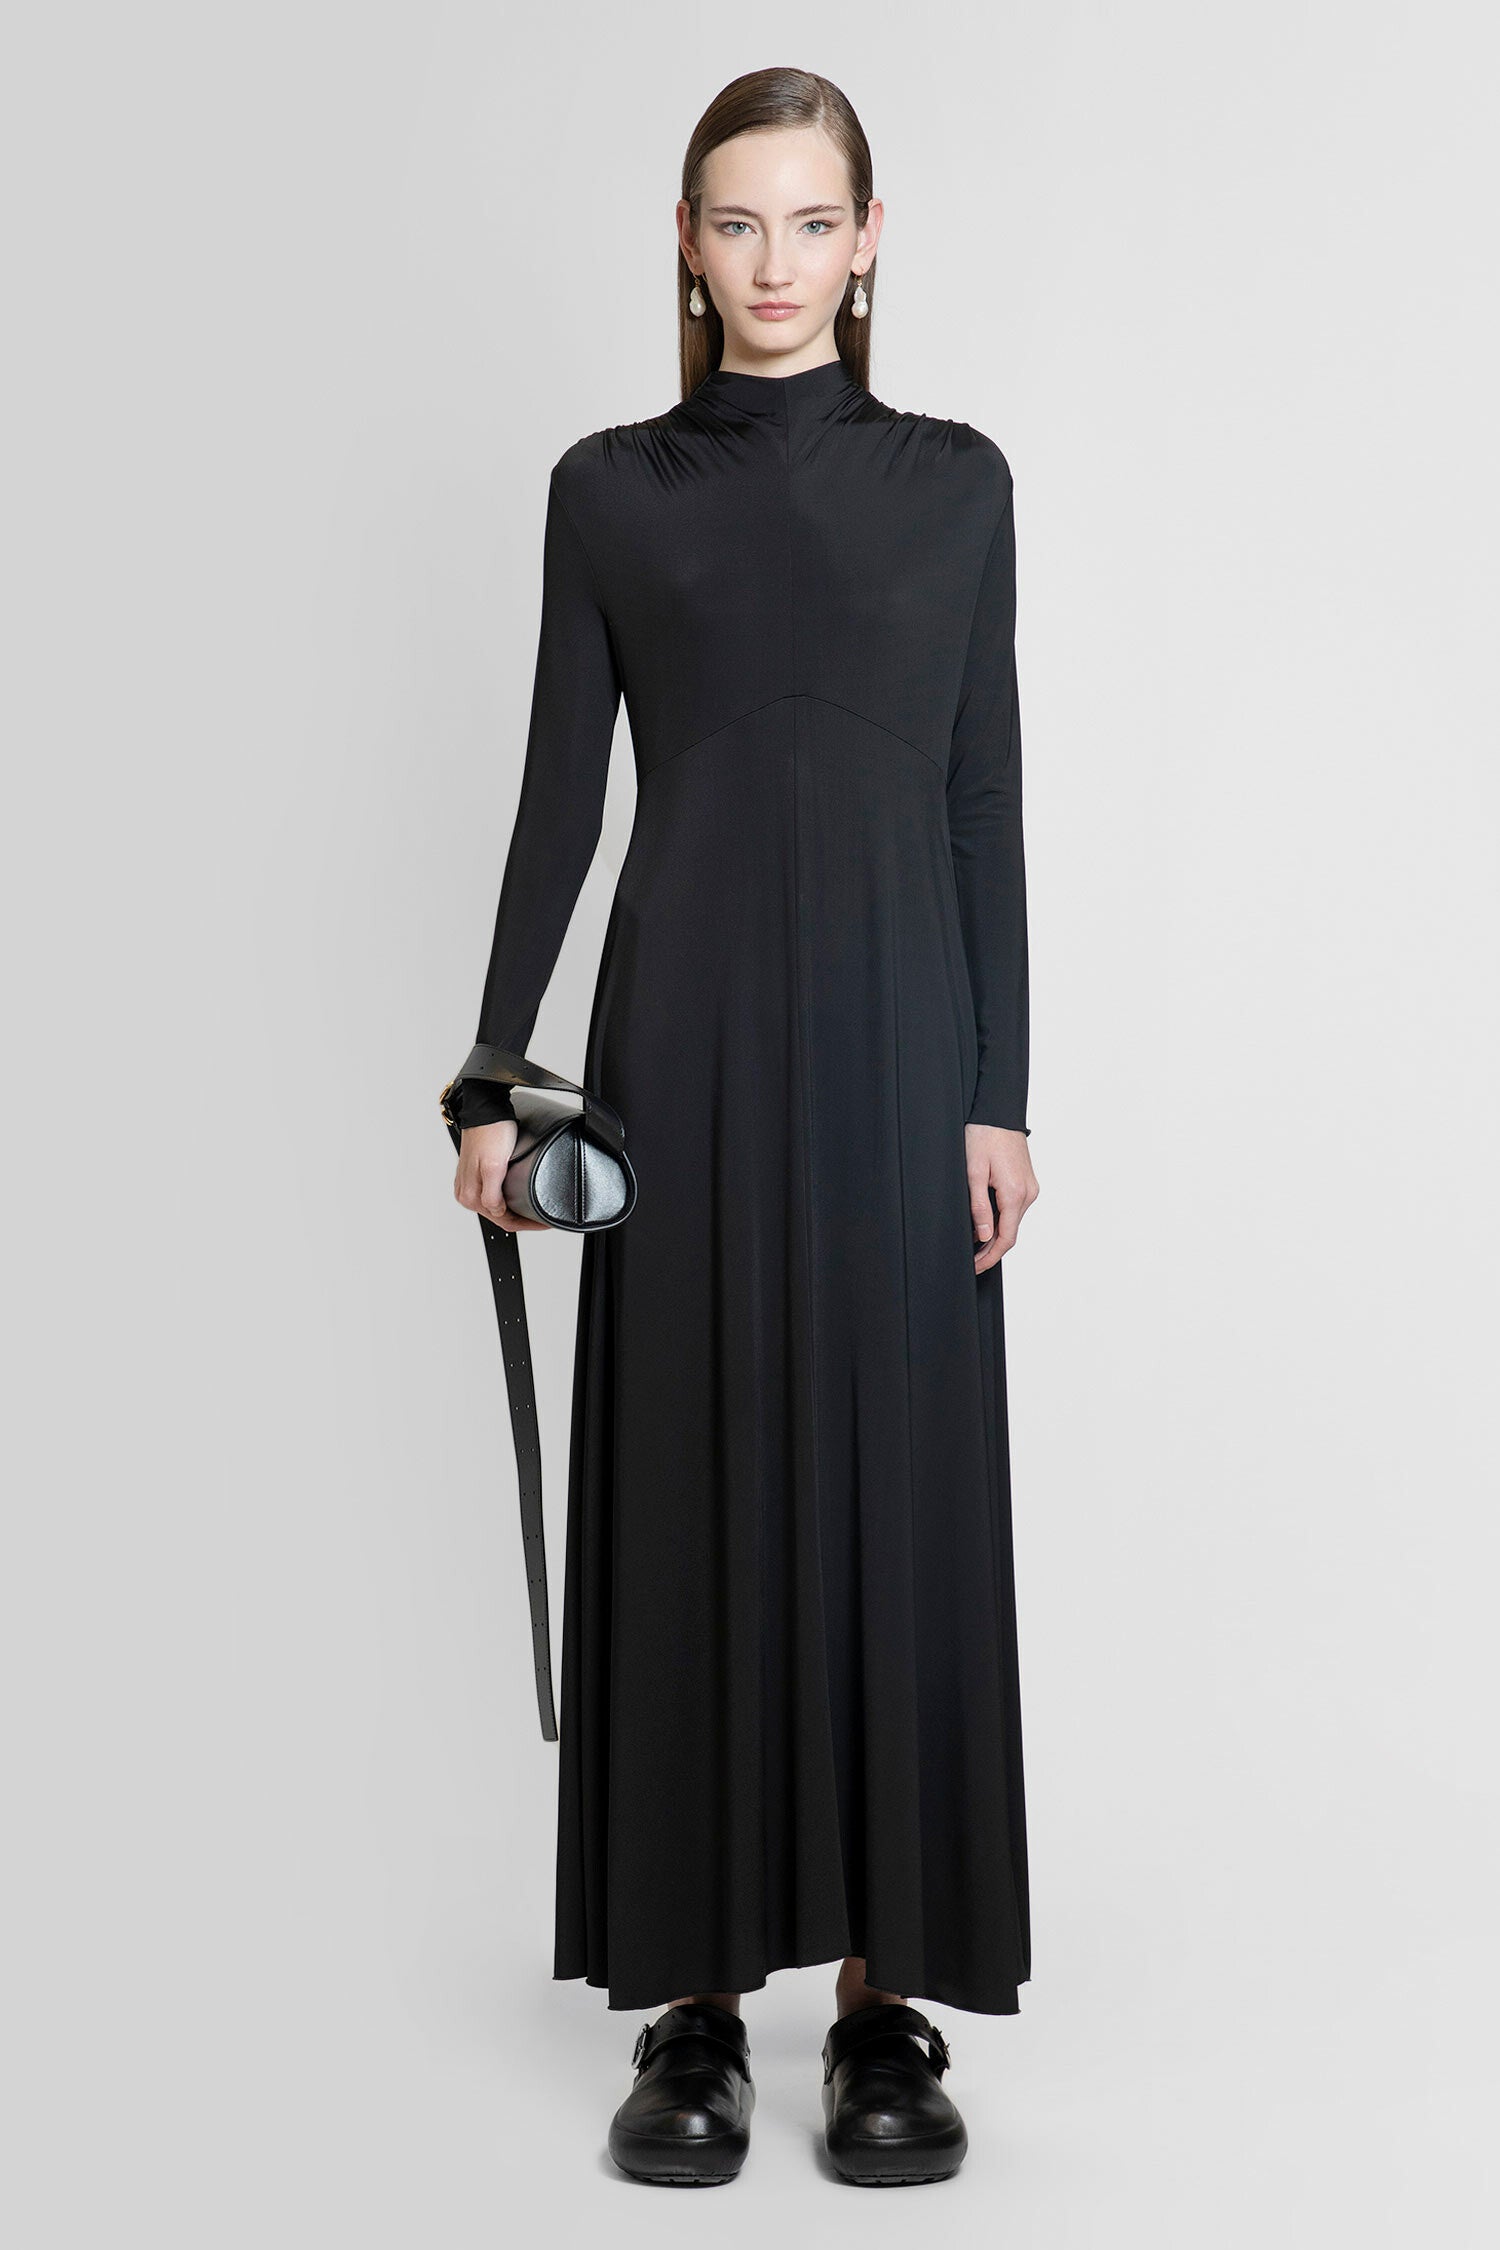 JIL SANDER WOMAN BLACK DRESSES